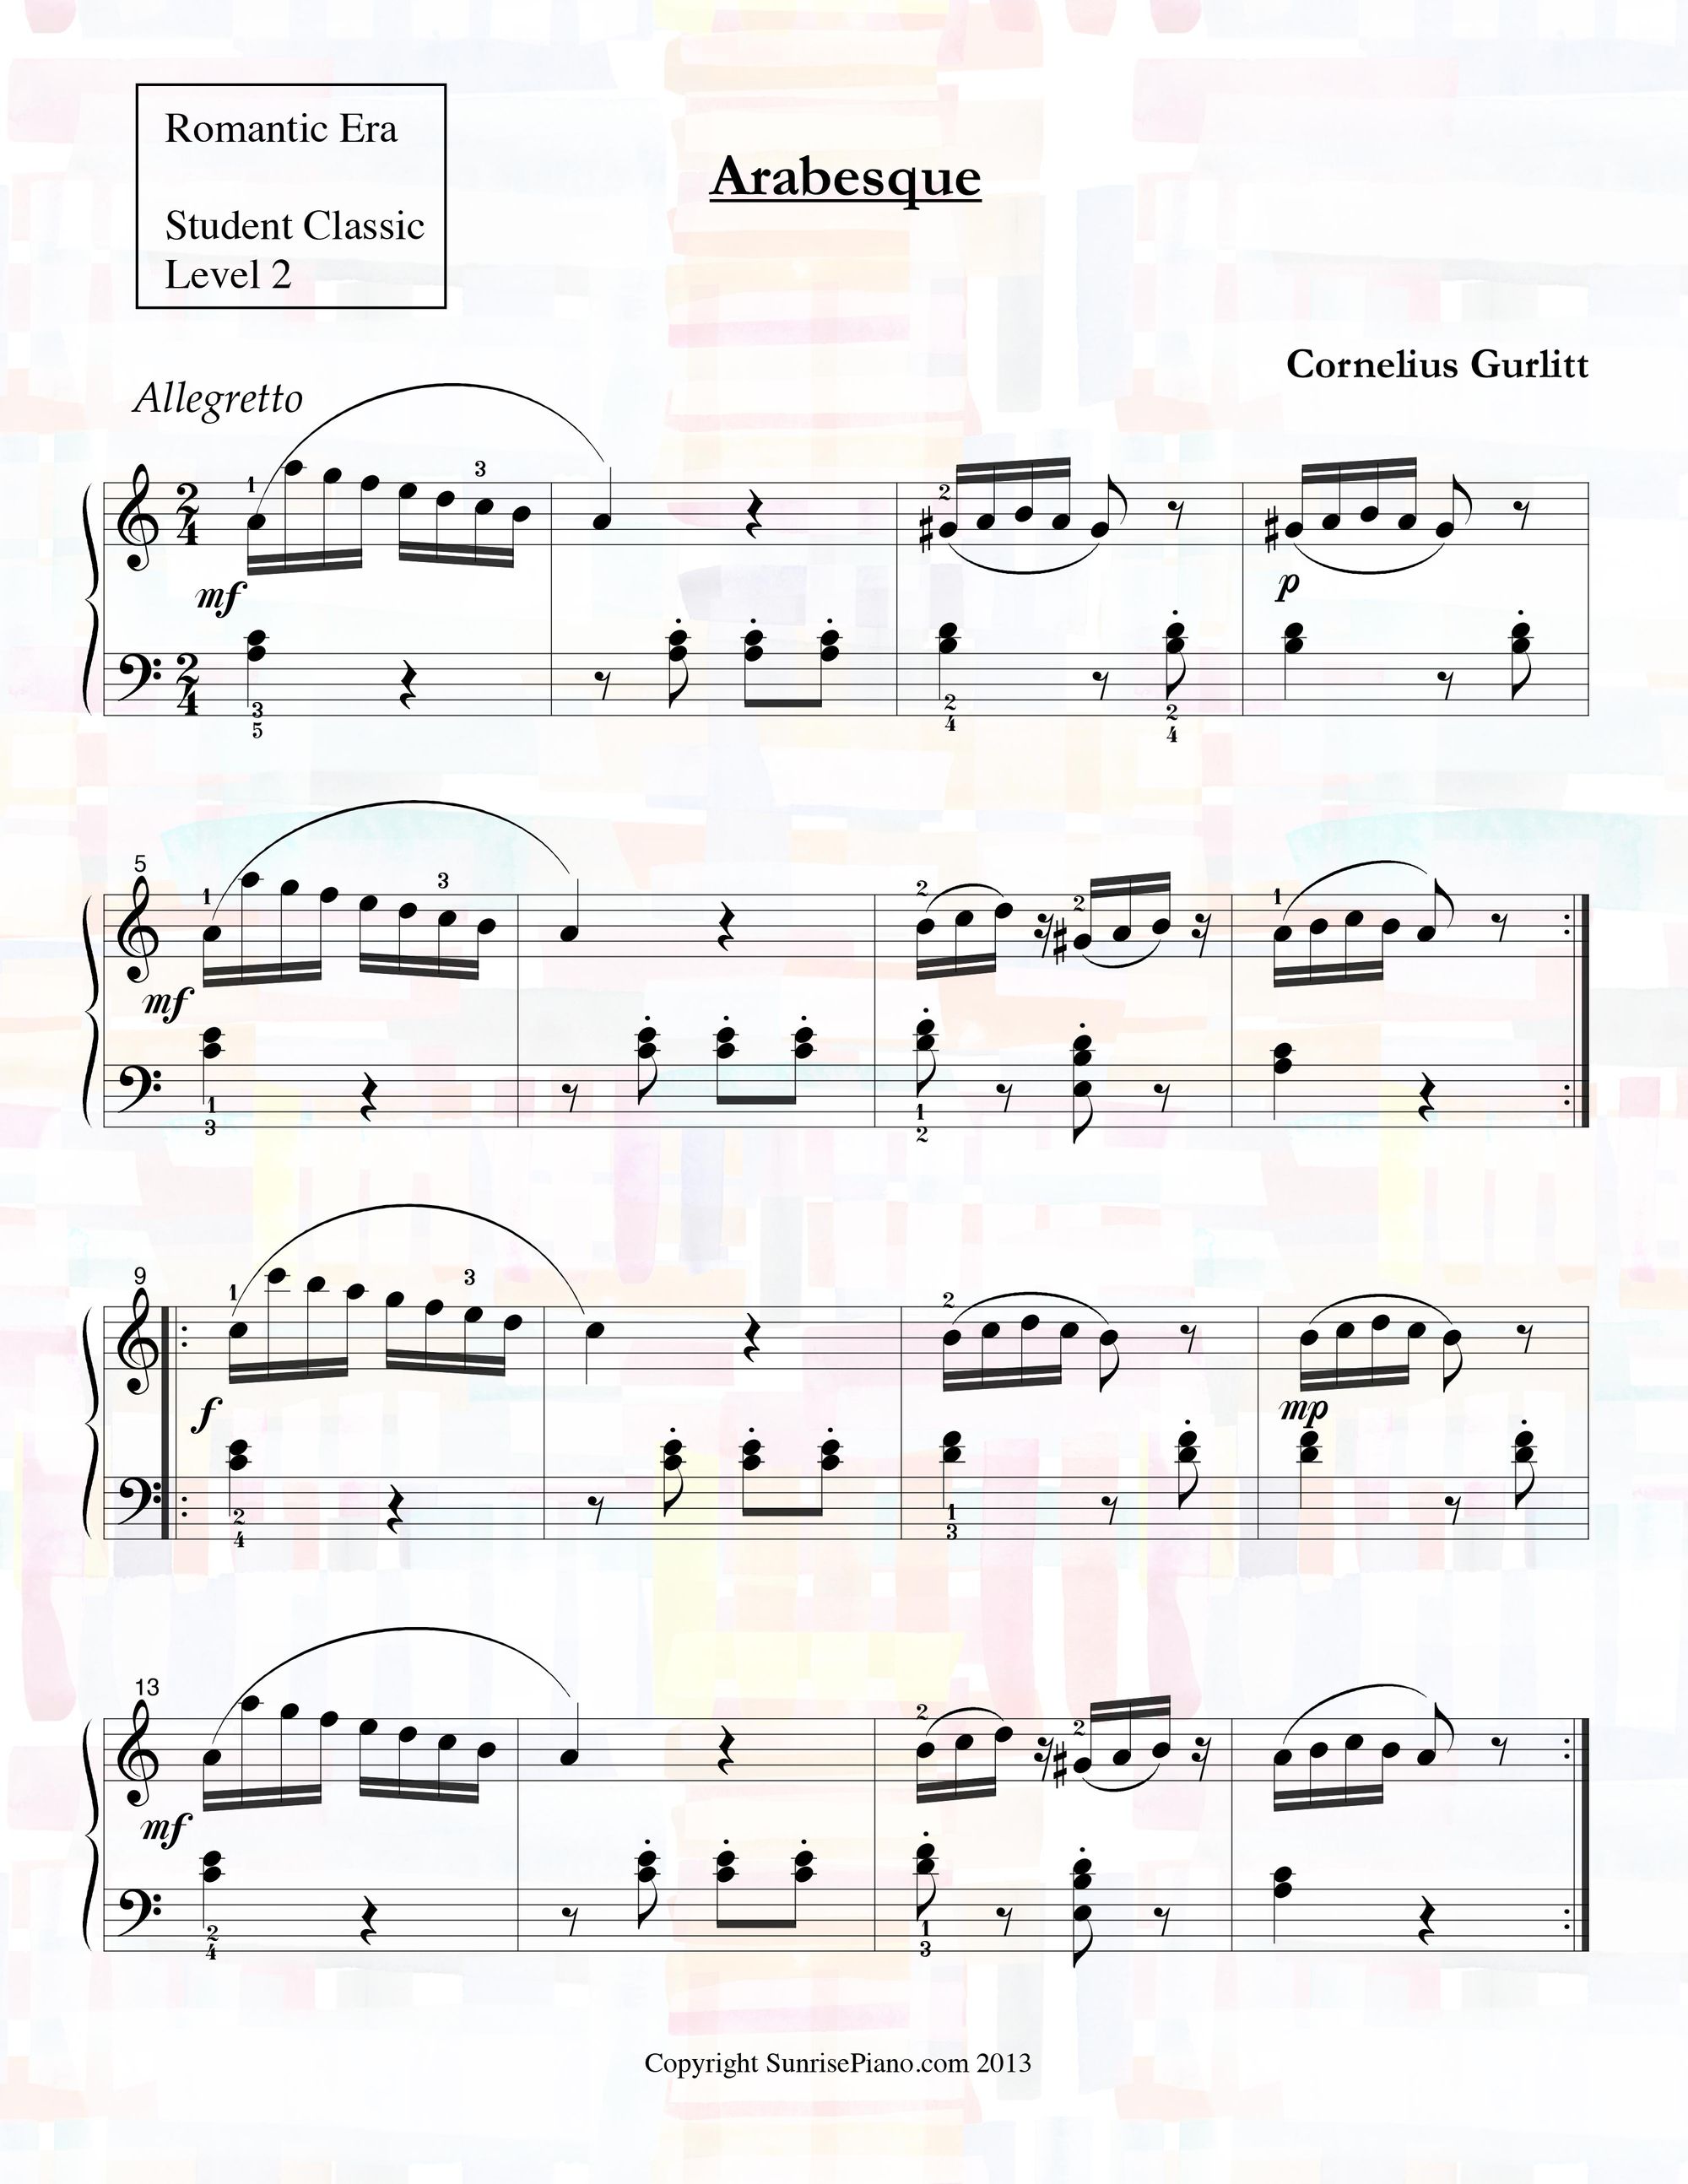 Cornelius Gurlitt - Arabesque - Piano Sheet Music